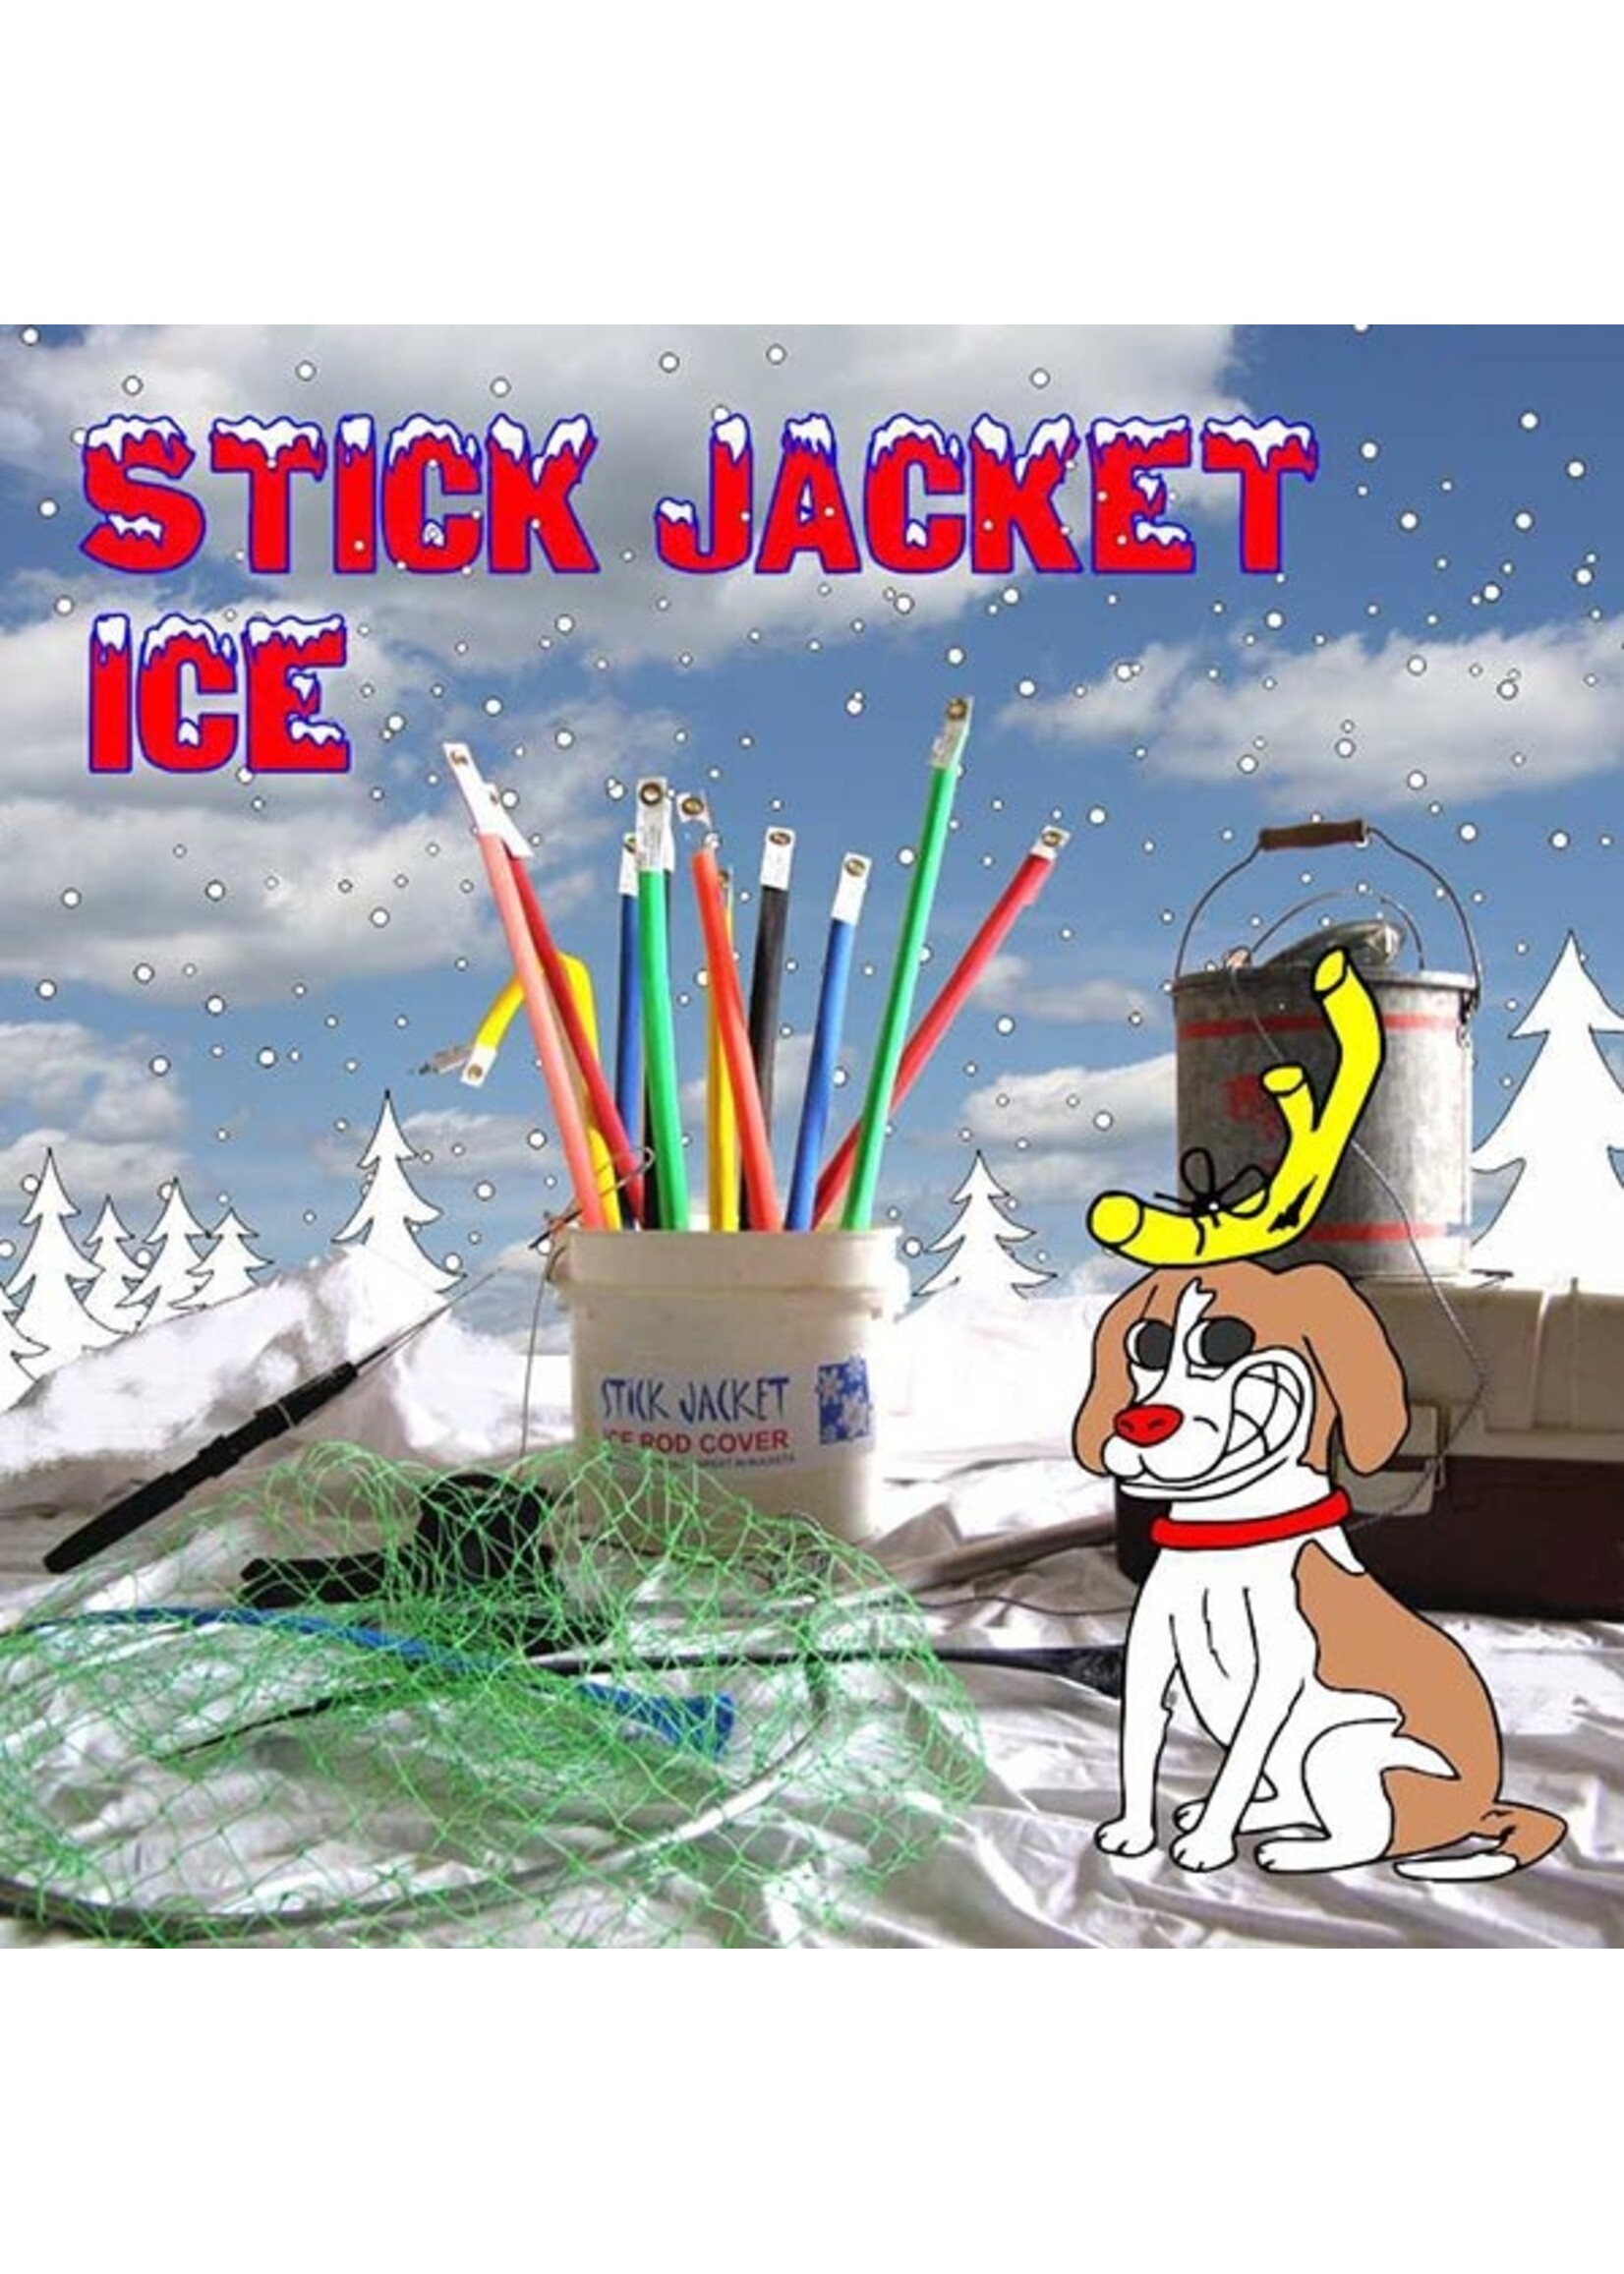 Stick Jacket Stick Jacket Ice Rod Cover